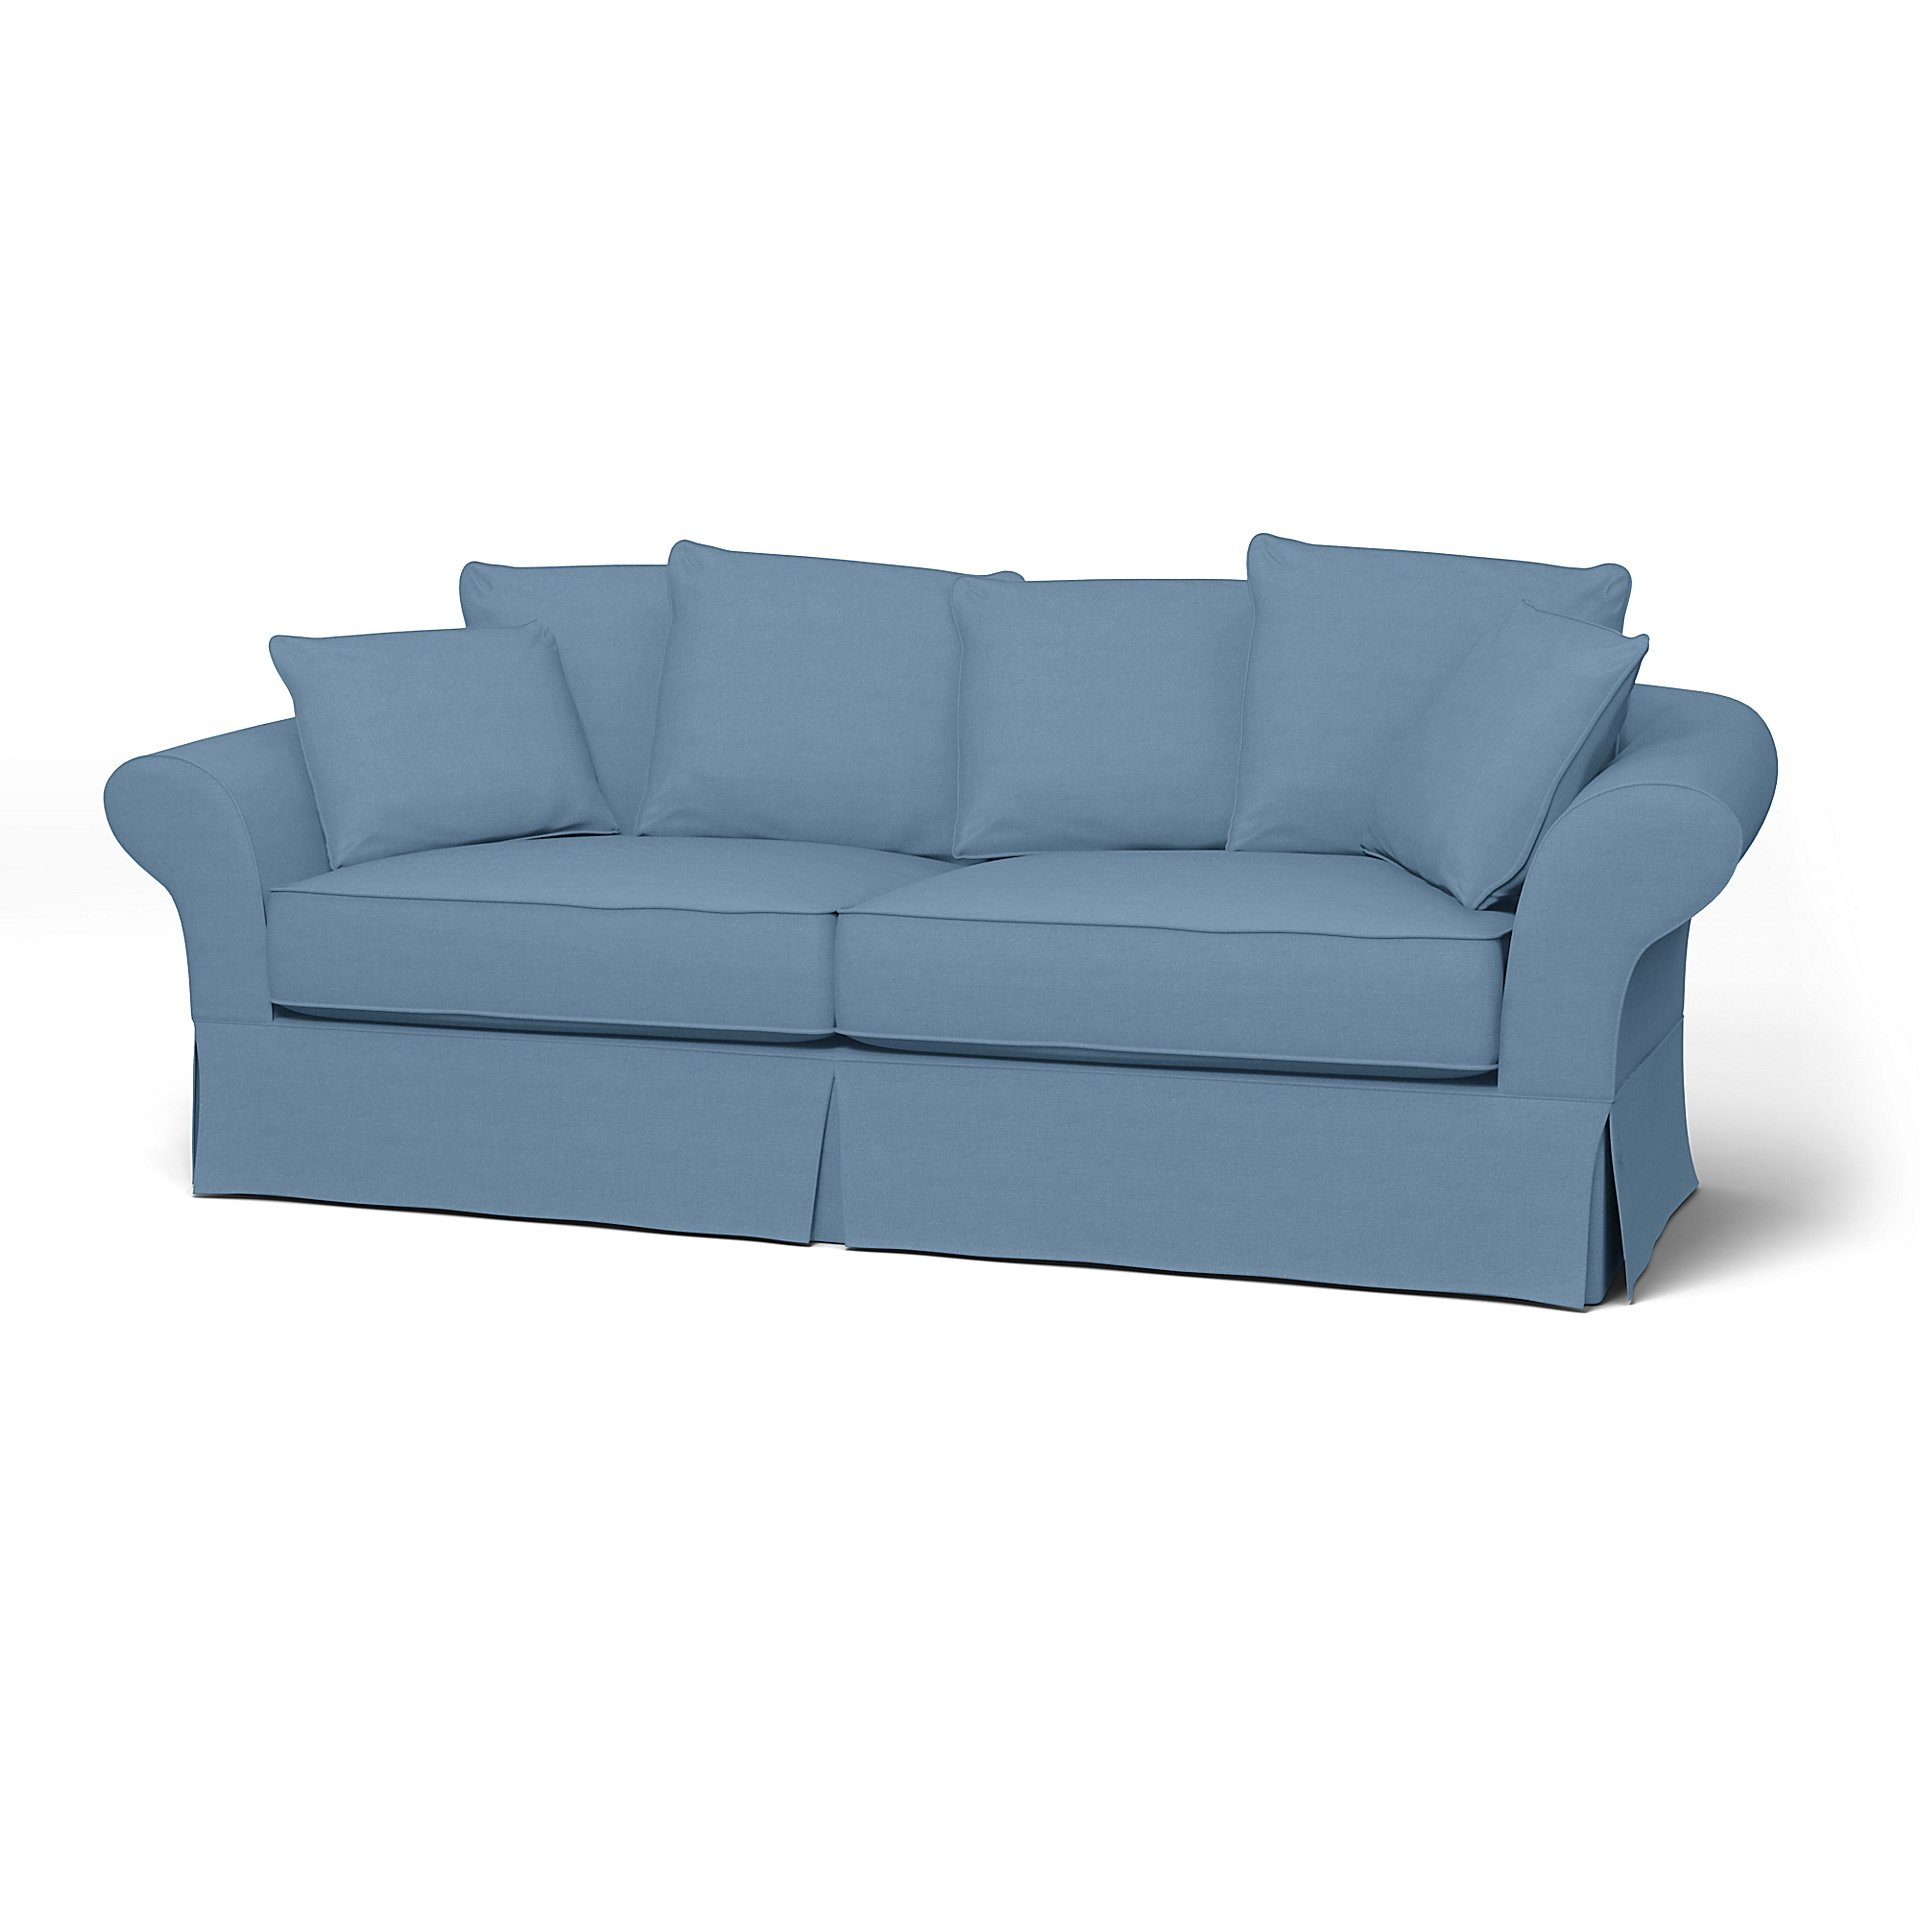 IKEA - Backamo 3 Seater Sofa Cover, Vintage Blue, Linen - Bemz